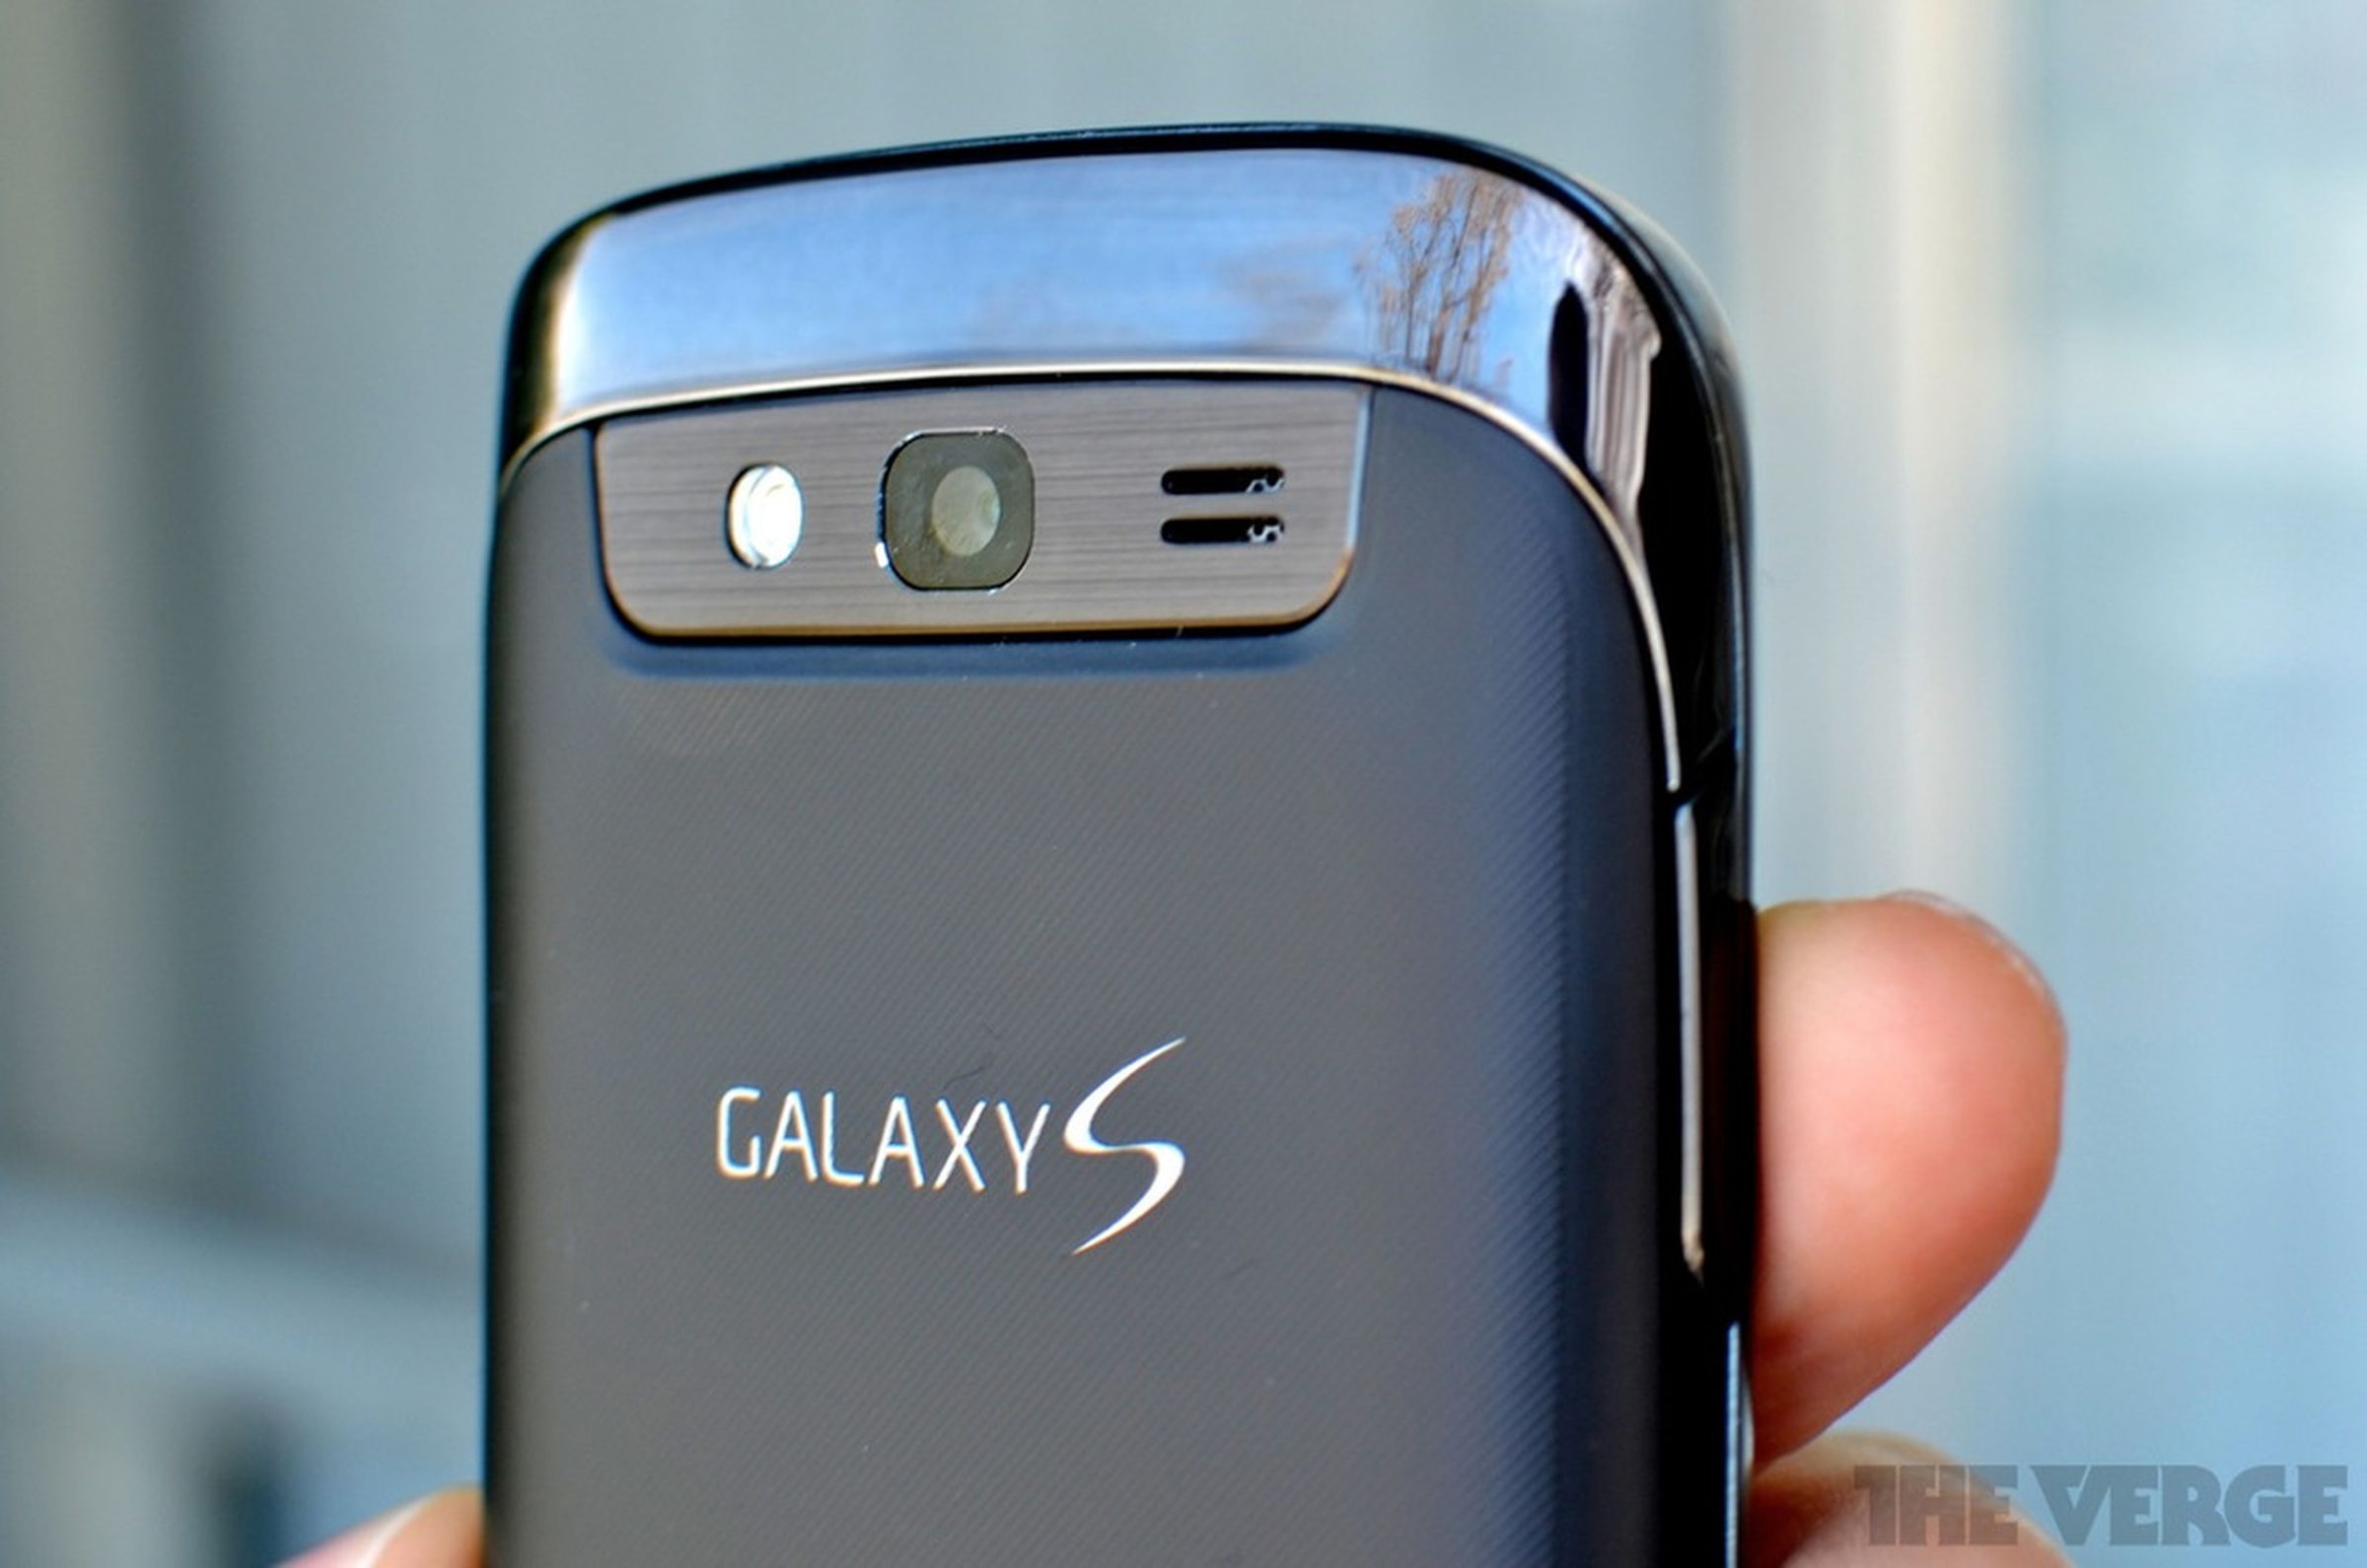 Samsung Galaxy S Blaze 4G photos